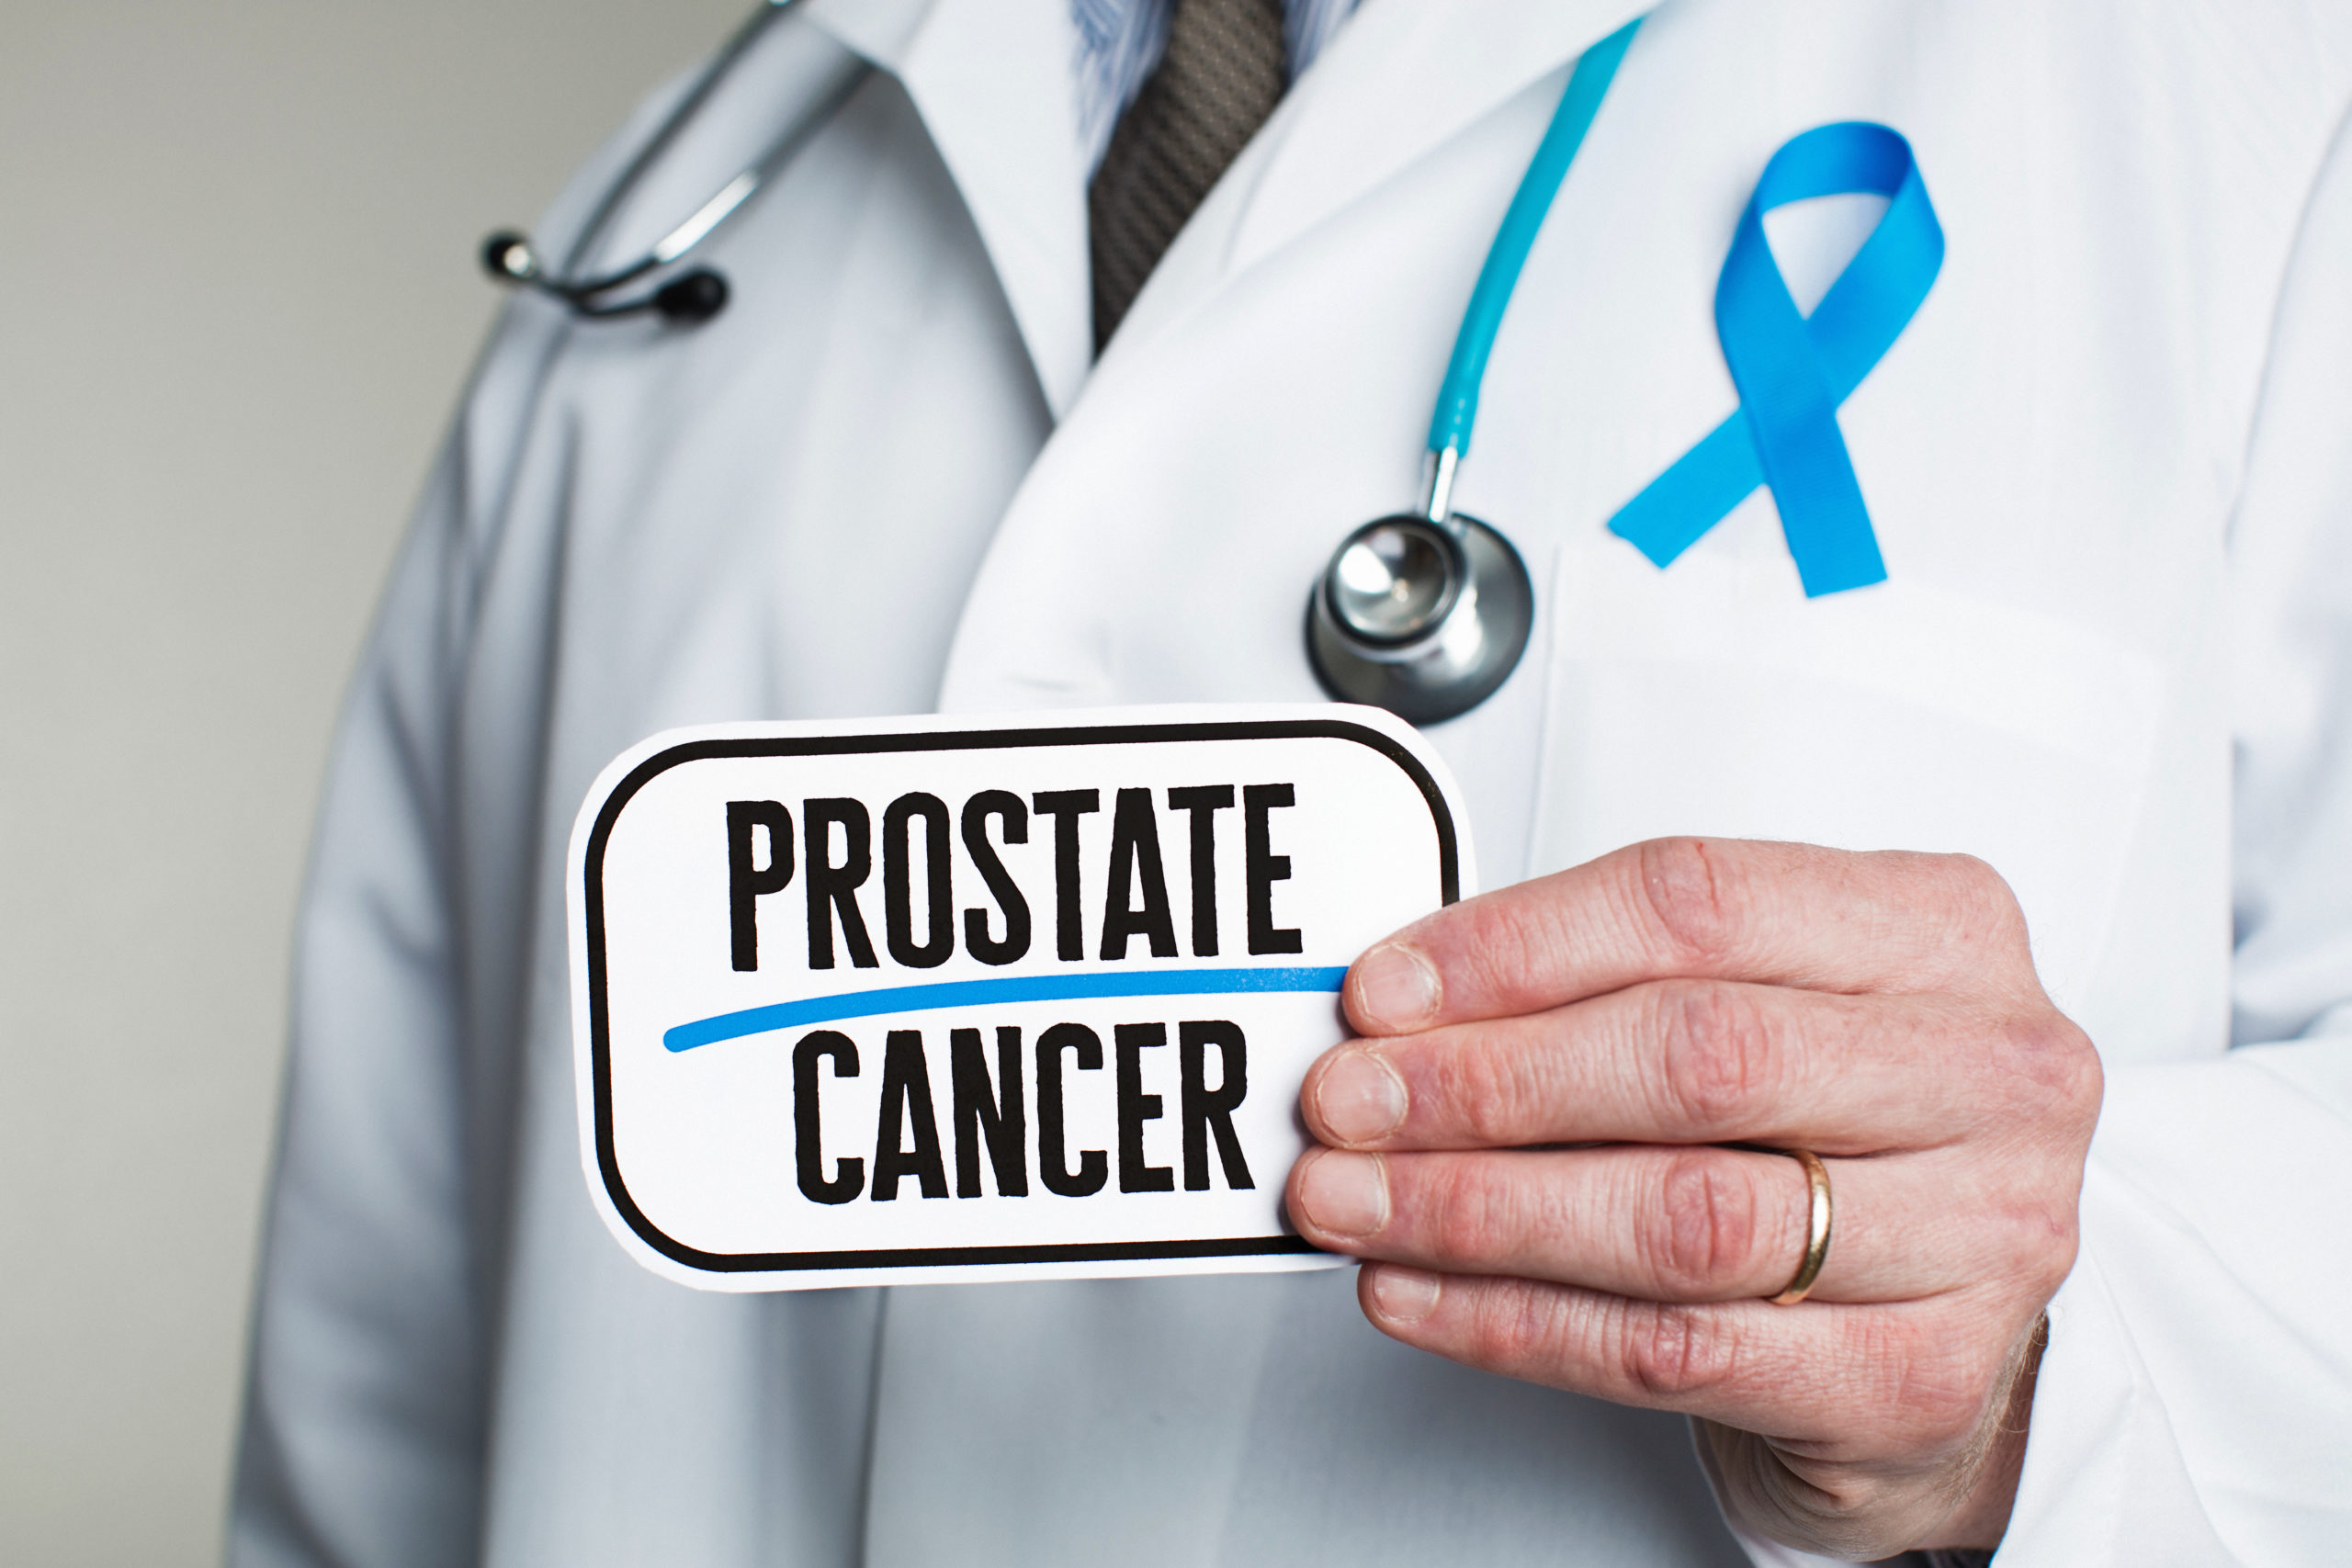 Prostate cancer awareness